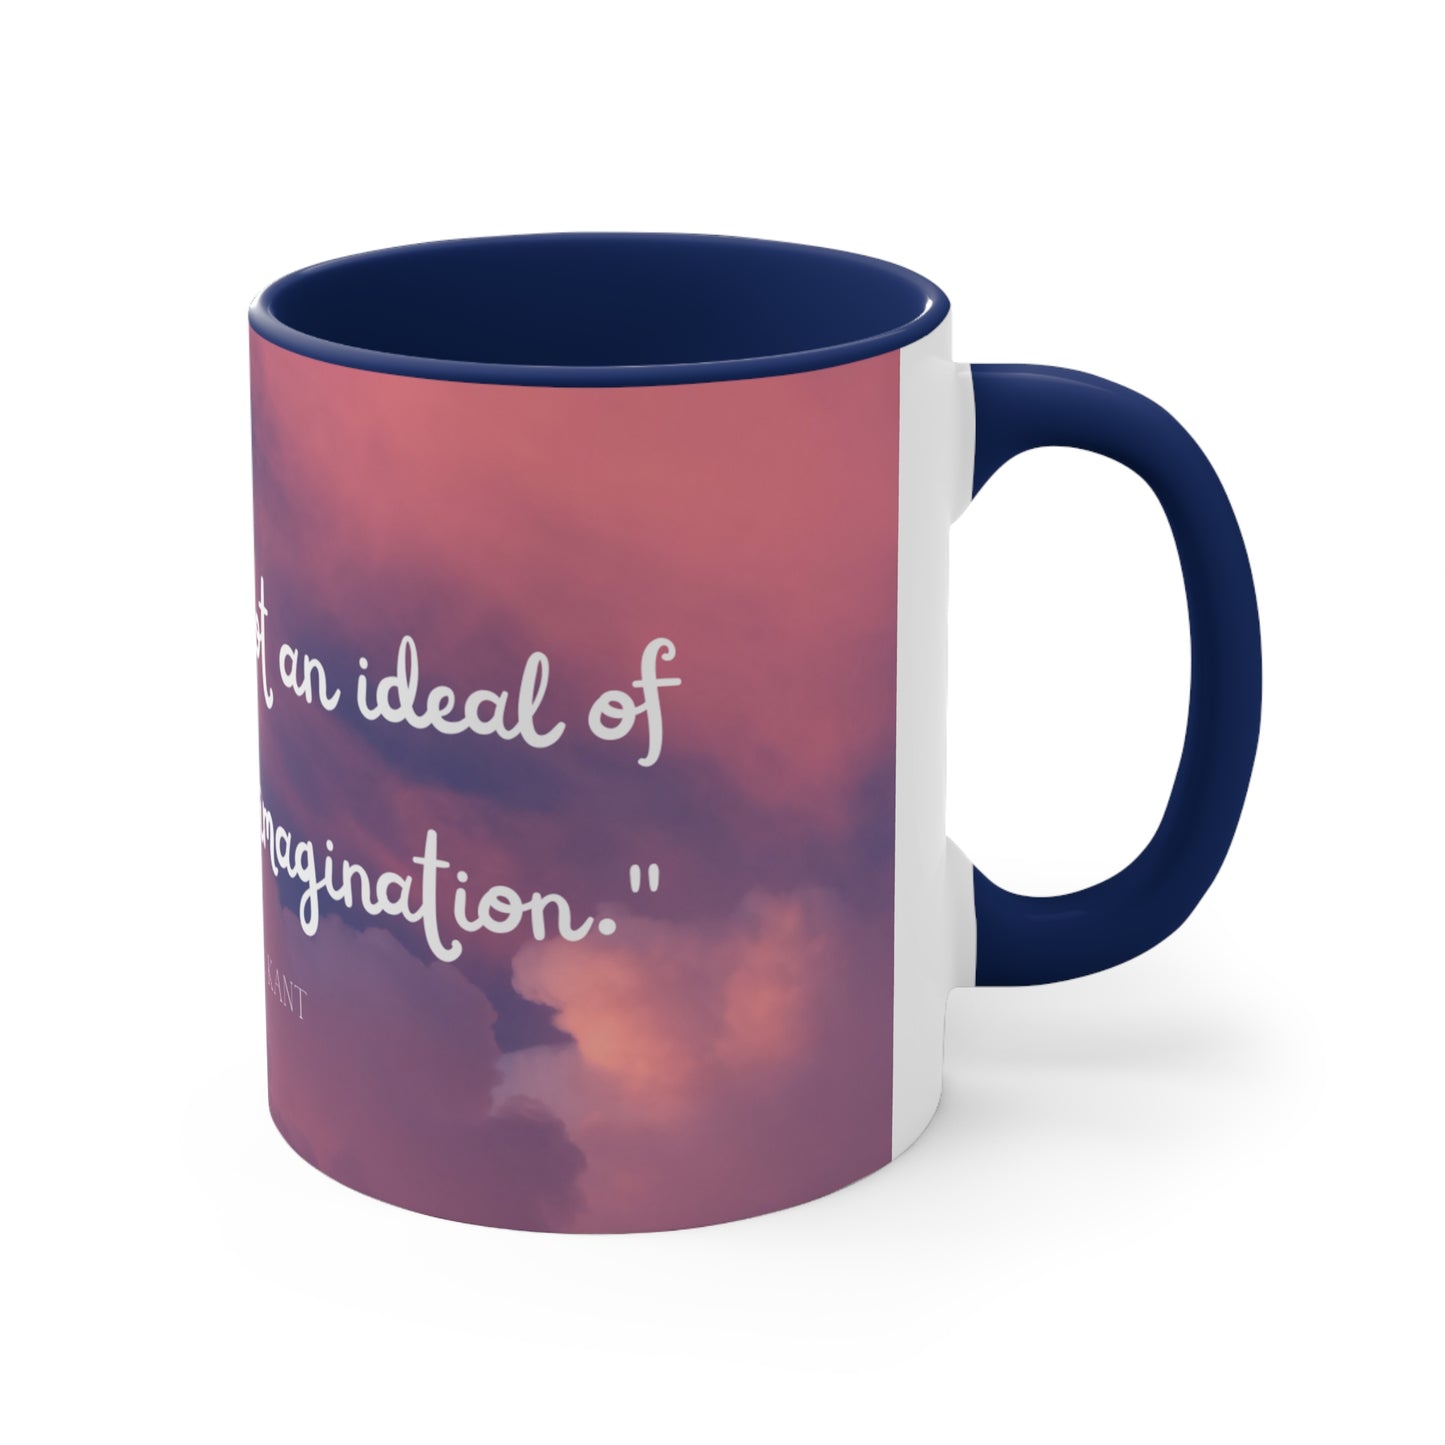 Imaginative Happiness, Accent Coffee Mug, 11oz